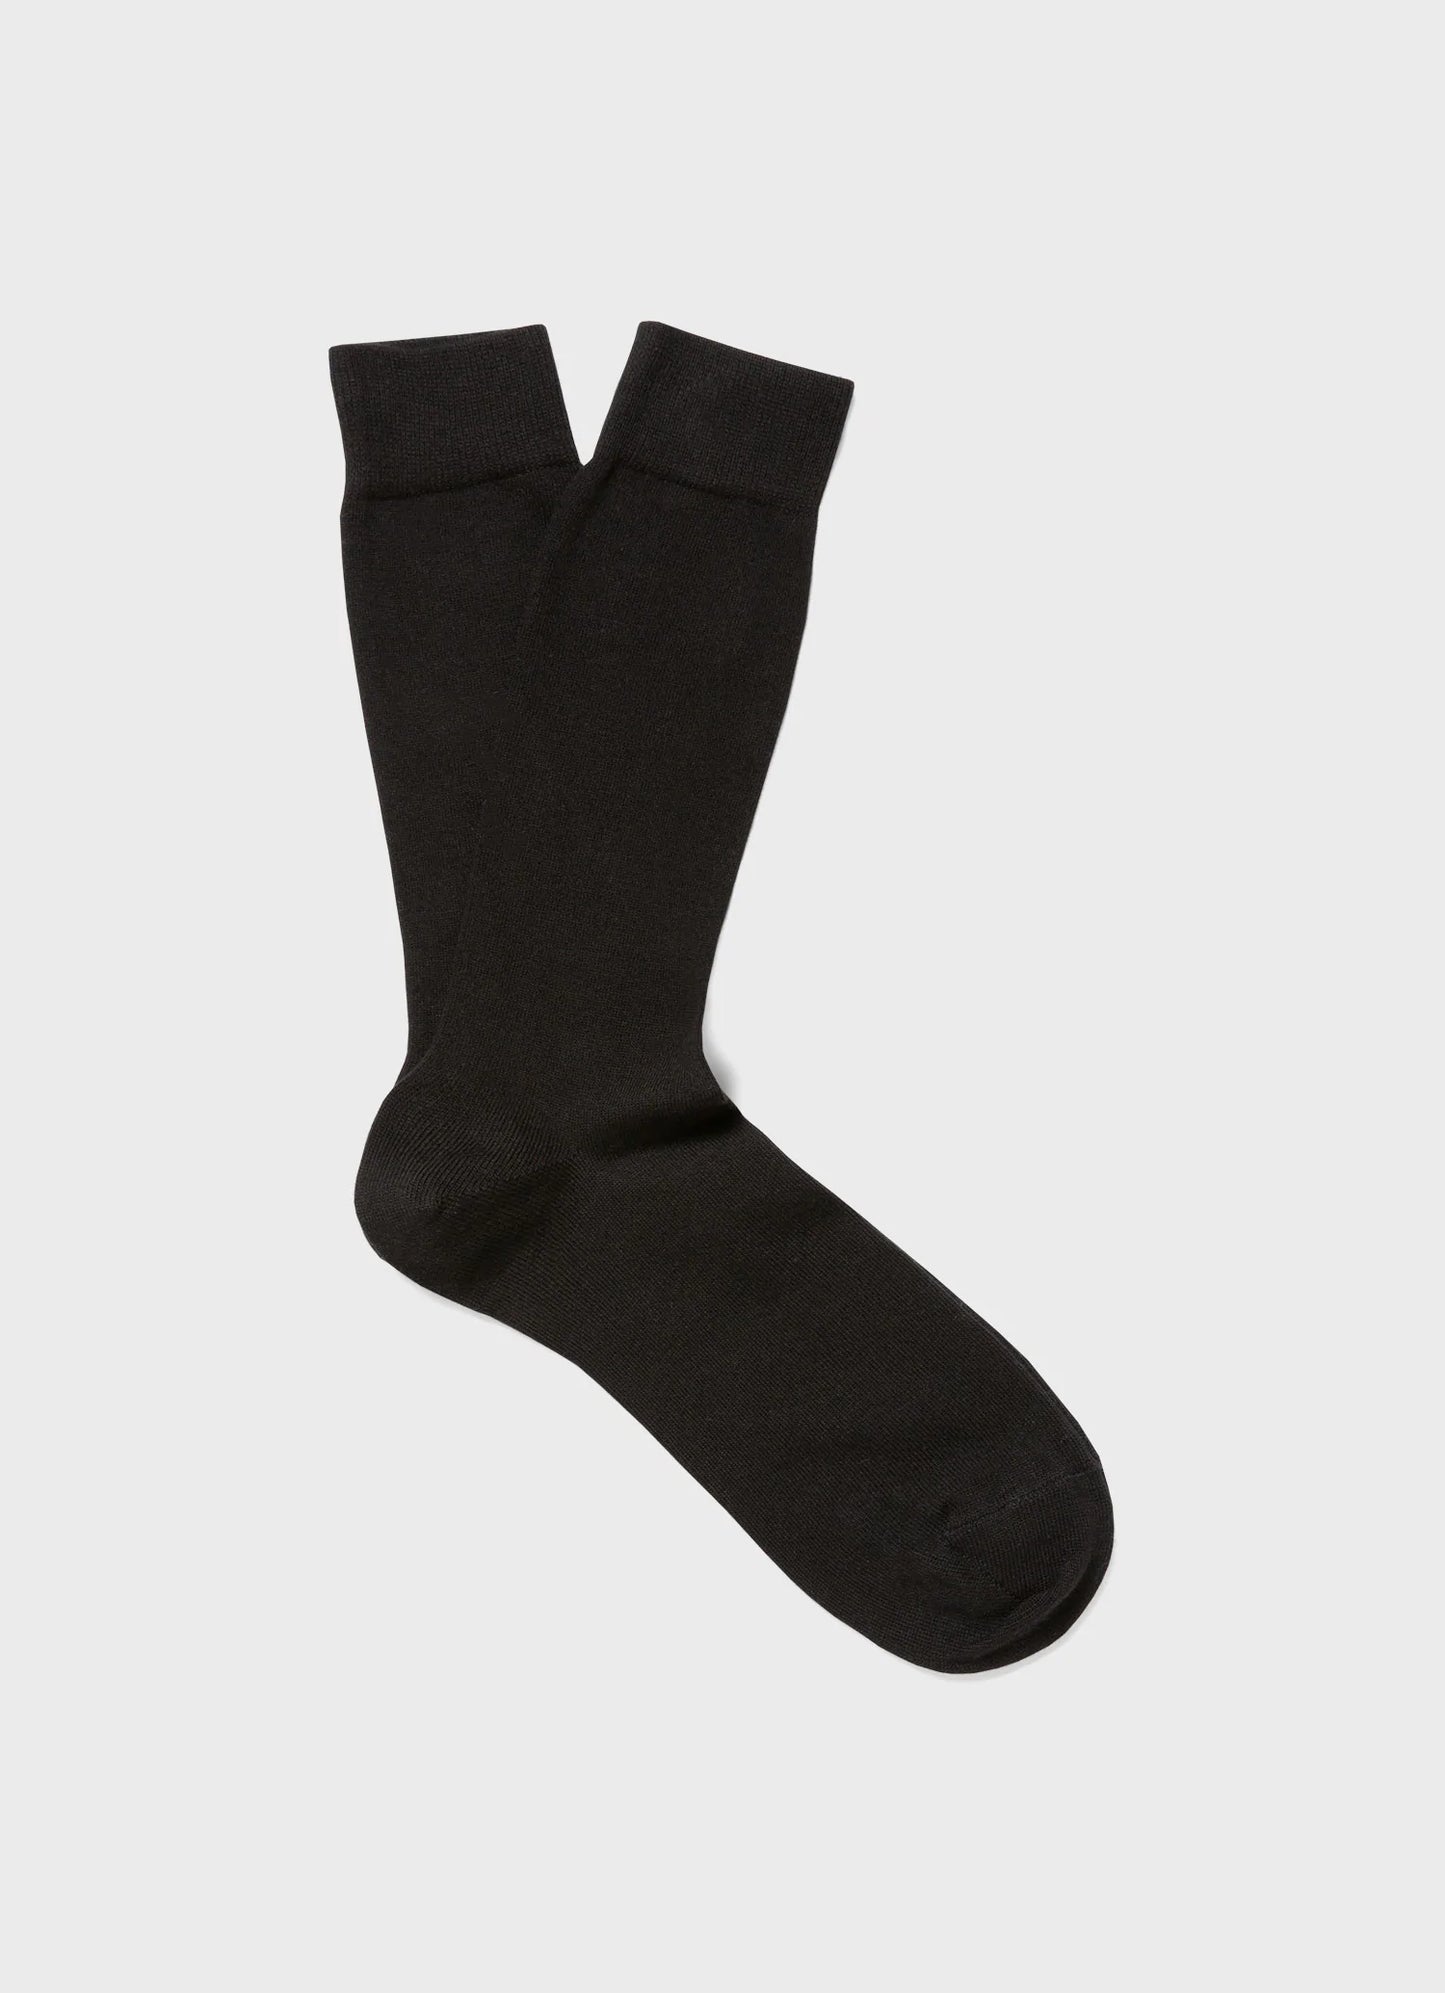 Long Staple Black Cotton Socks